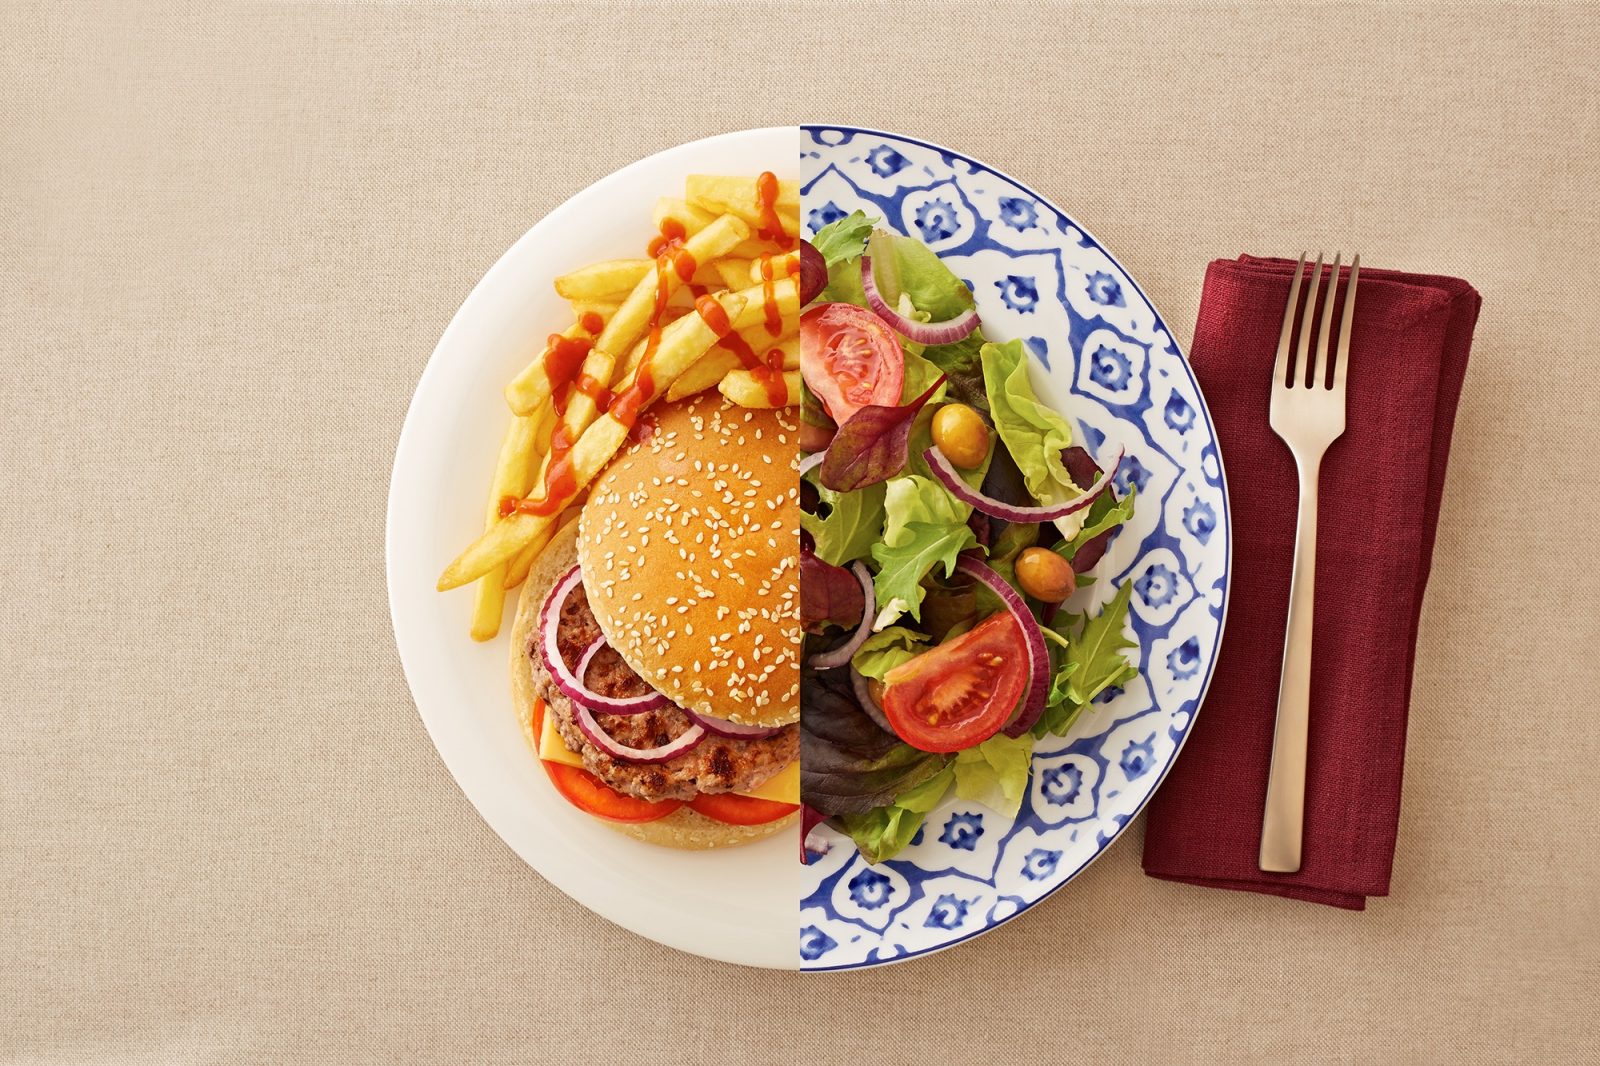 Тарелка в которой лежит: картошка фри, гамбургер, салат из зелени